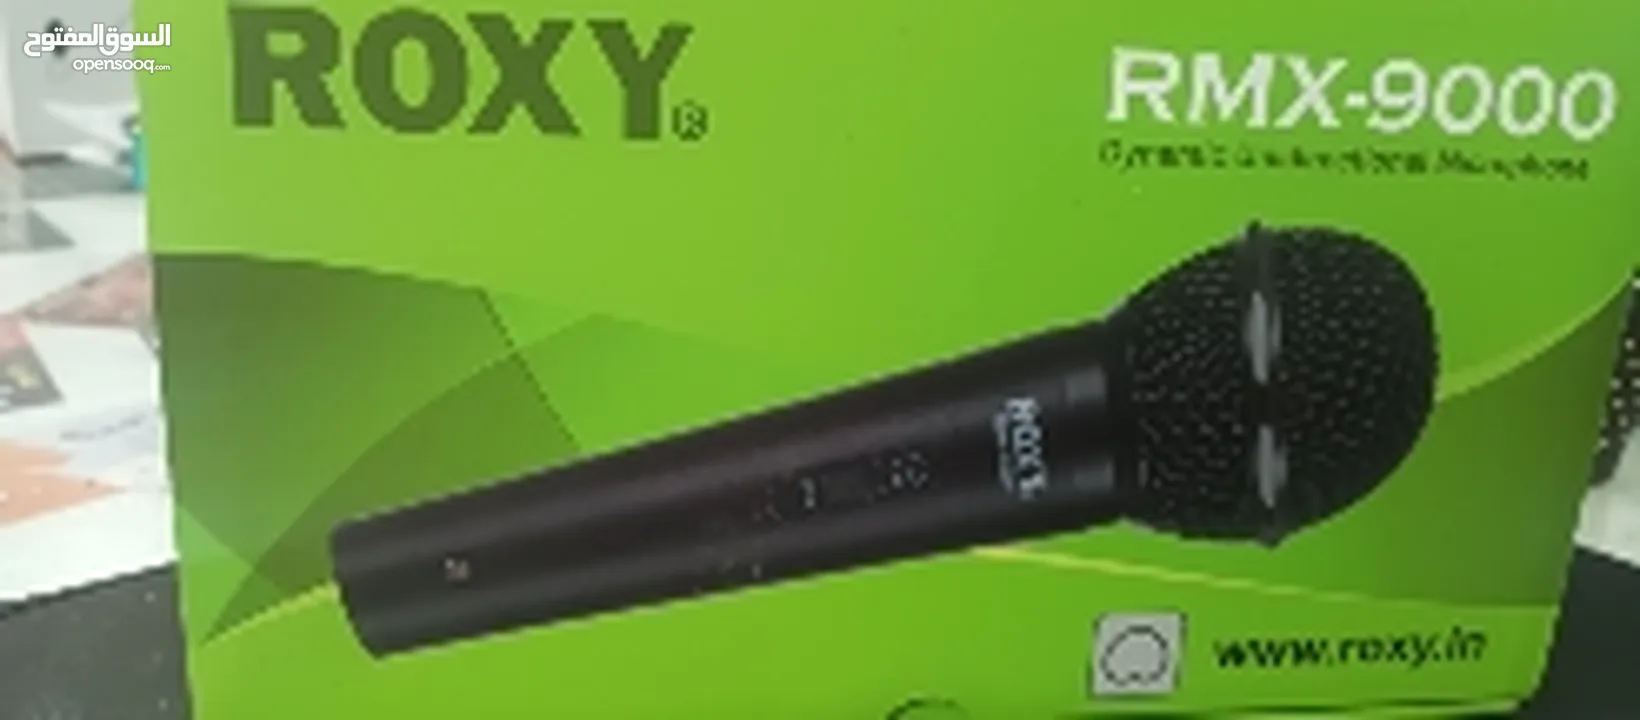 مايكروفون ROXY RMX-9000